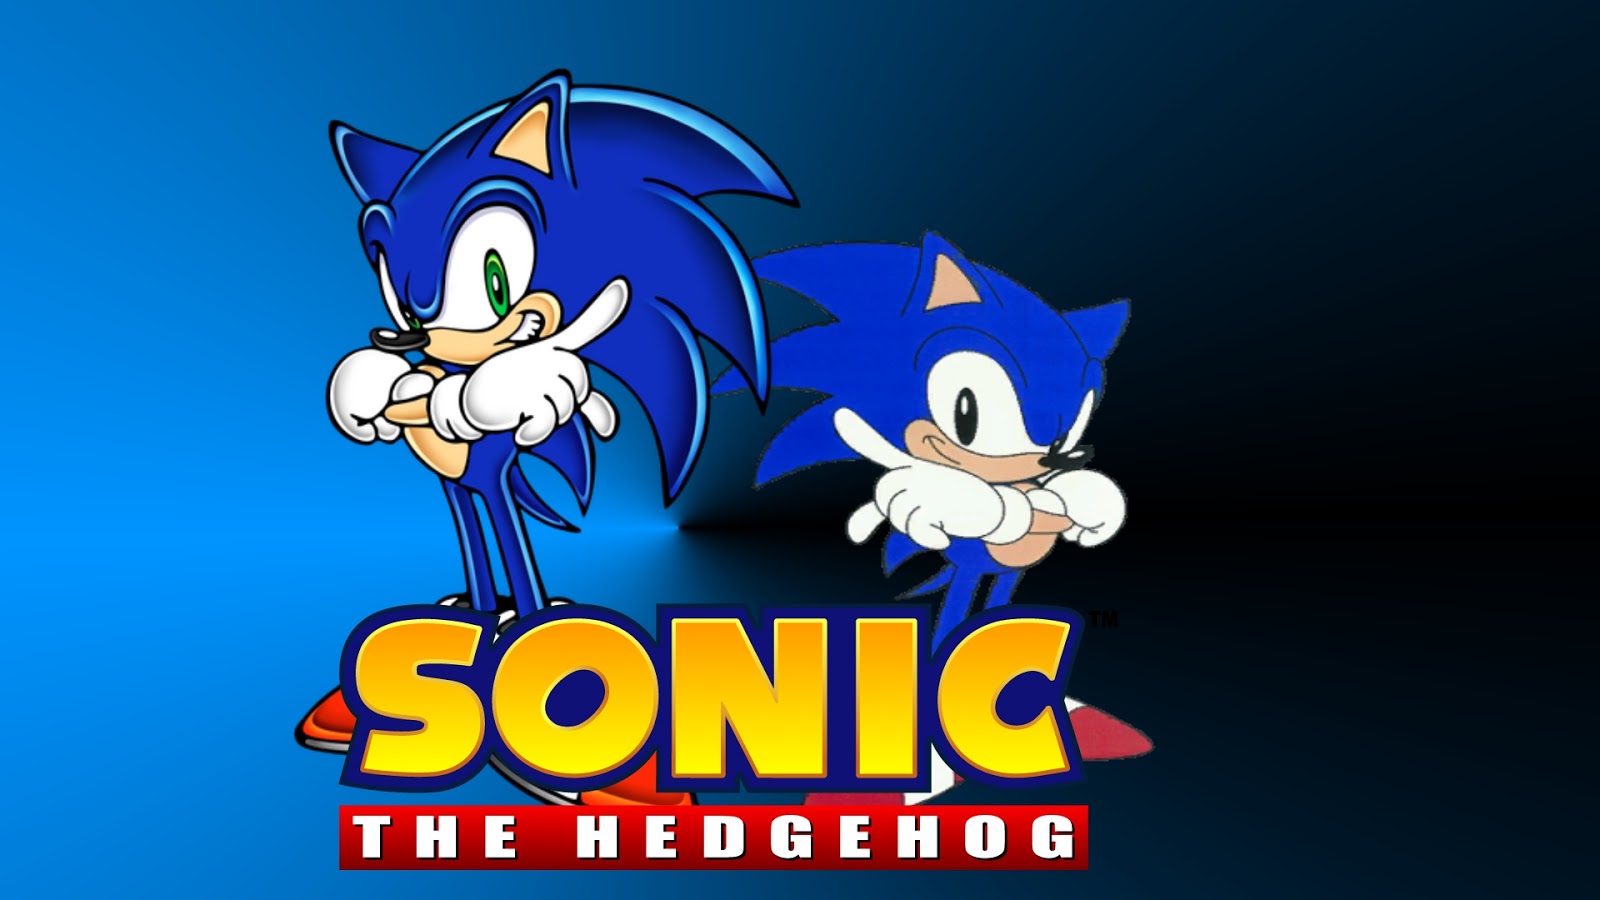 sonic the hedgehog wallpaper hd,animated cartoon,cartoon,sonic the hedgehog,fictional character,animation